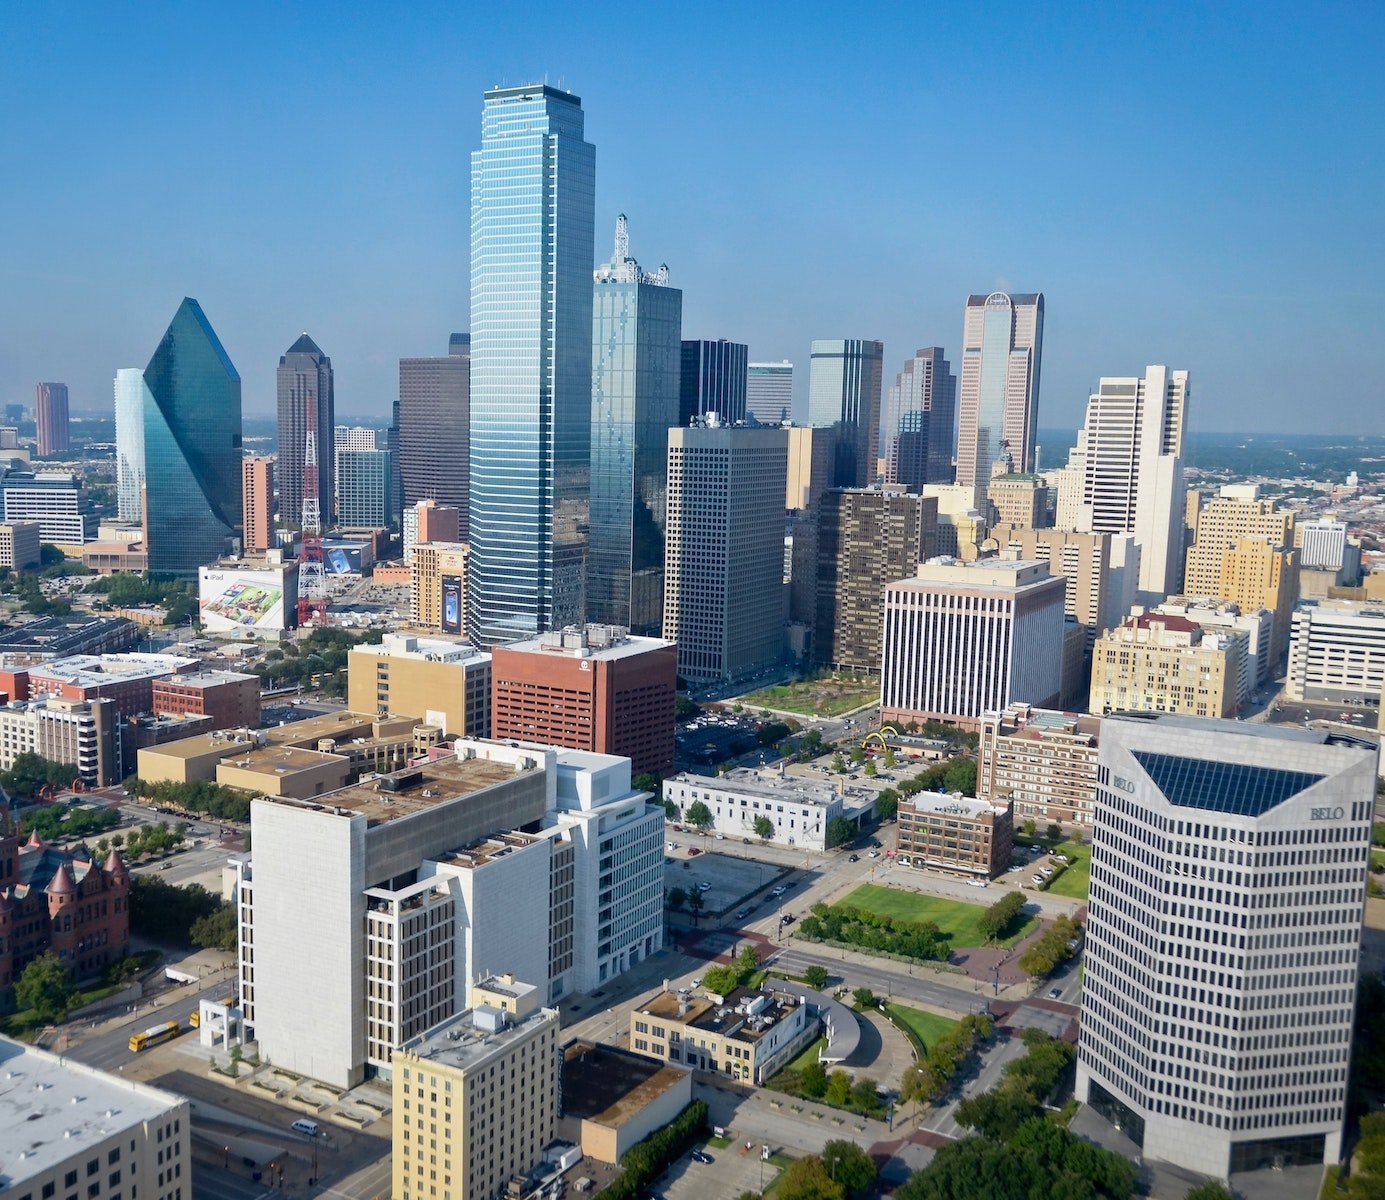 City skyline of Dallas, Texas on a clear, sunny day